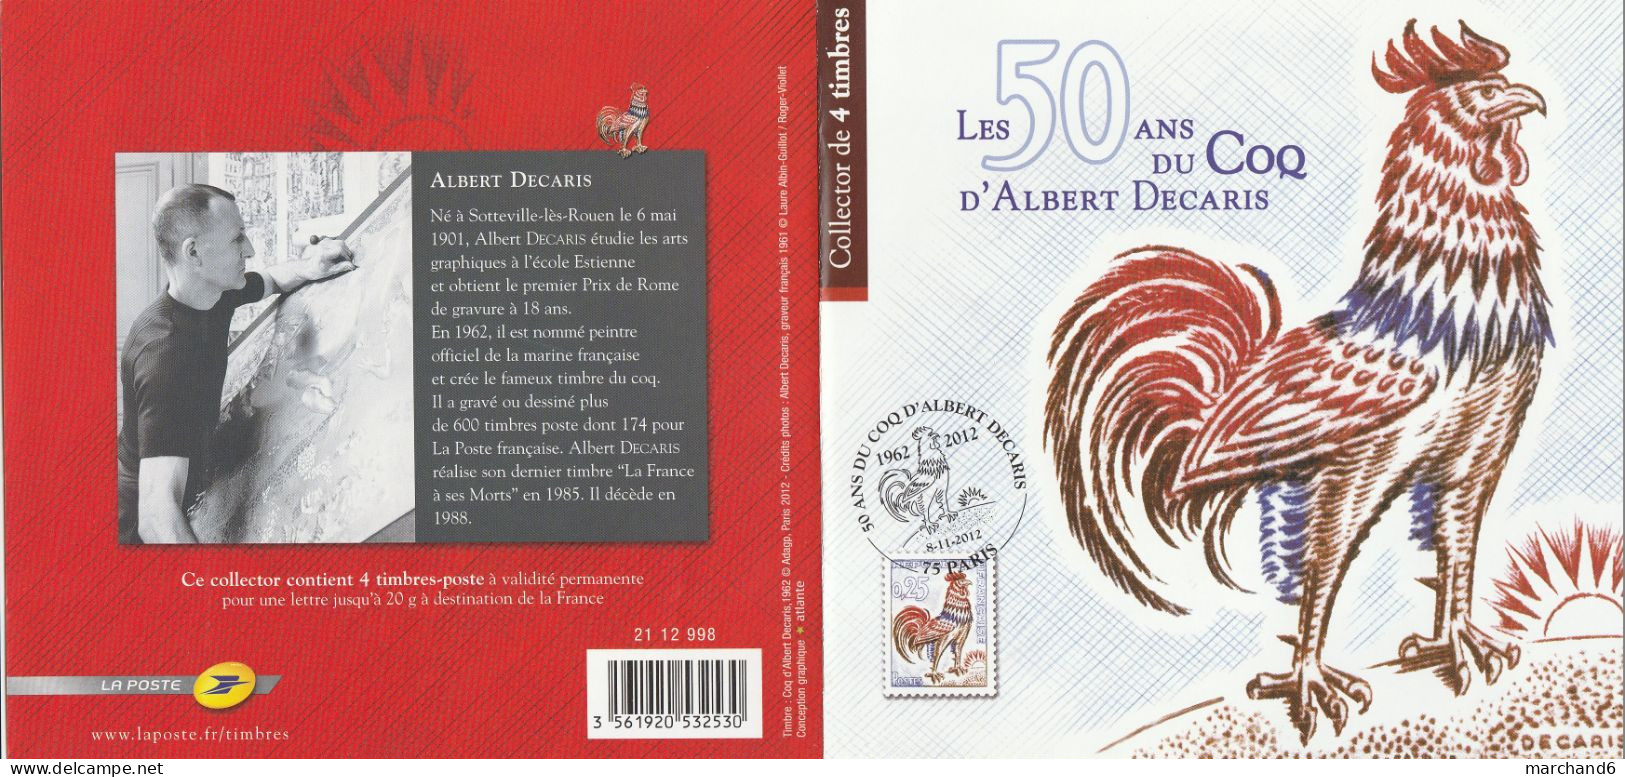 Feuillet Collector Les 50 Ans Du Coq D Albert Decaris France 2012 IDT L P 20gr 4 Timbres Autoadhésifs N°182 - Collectors